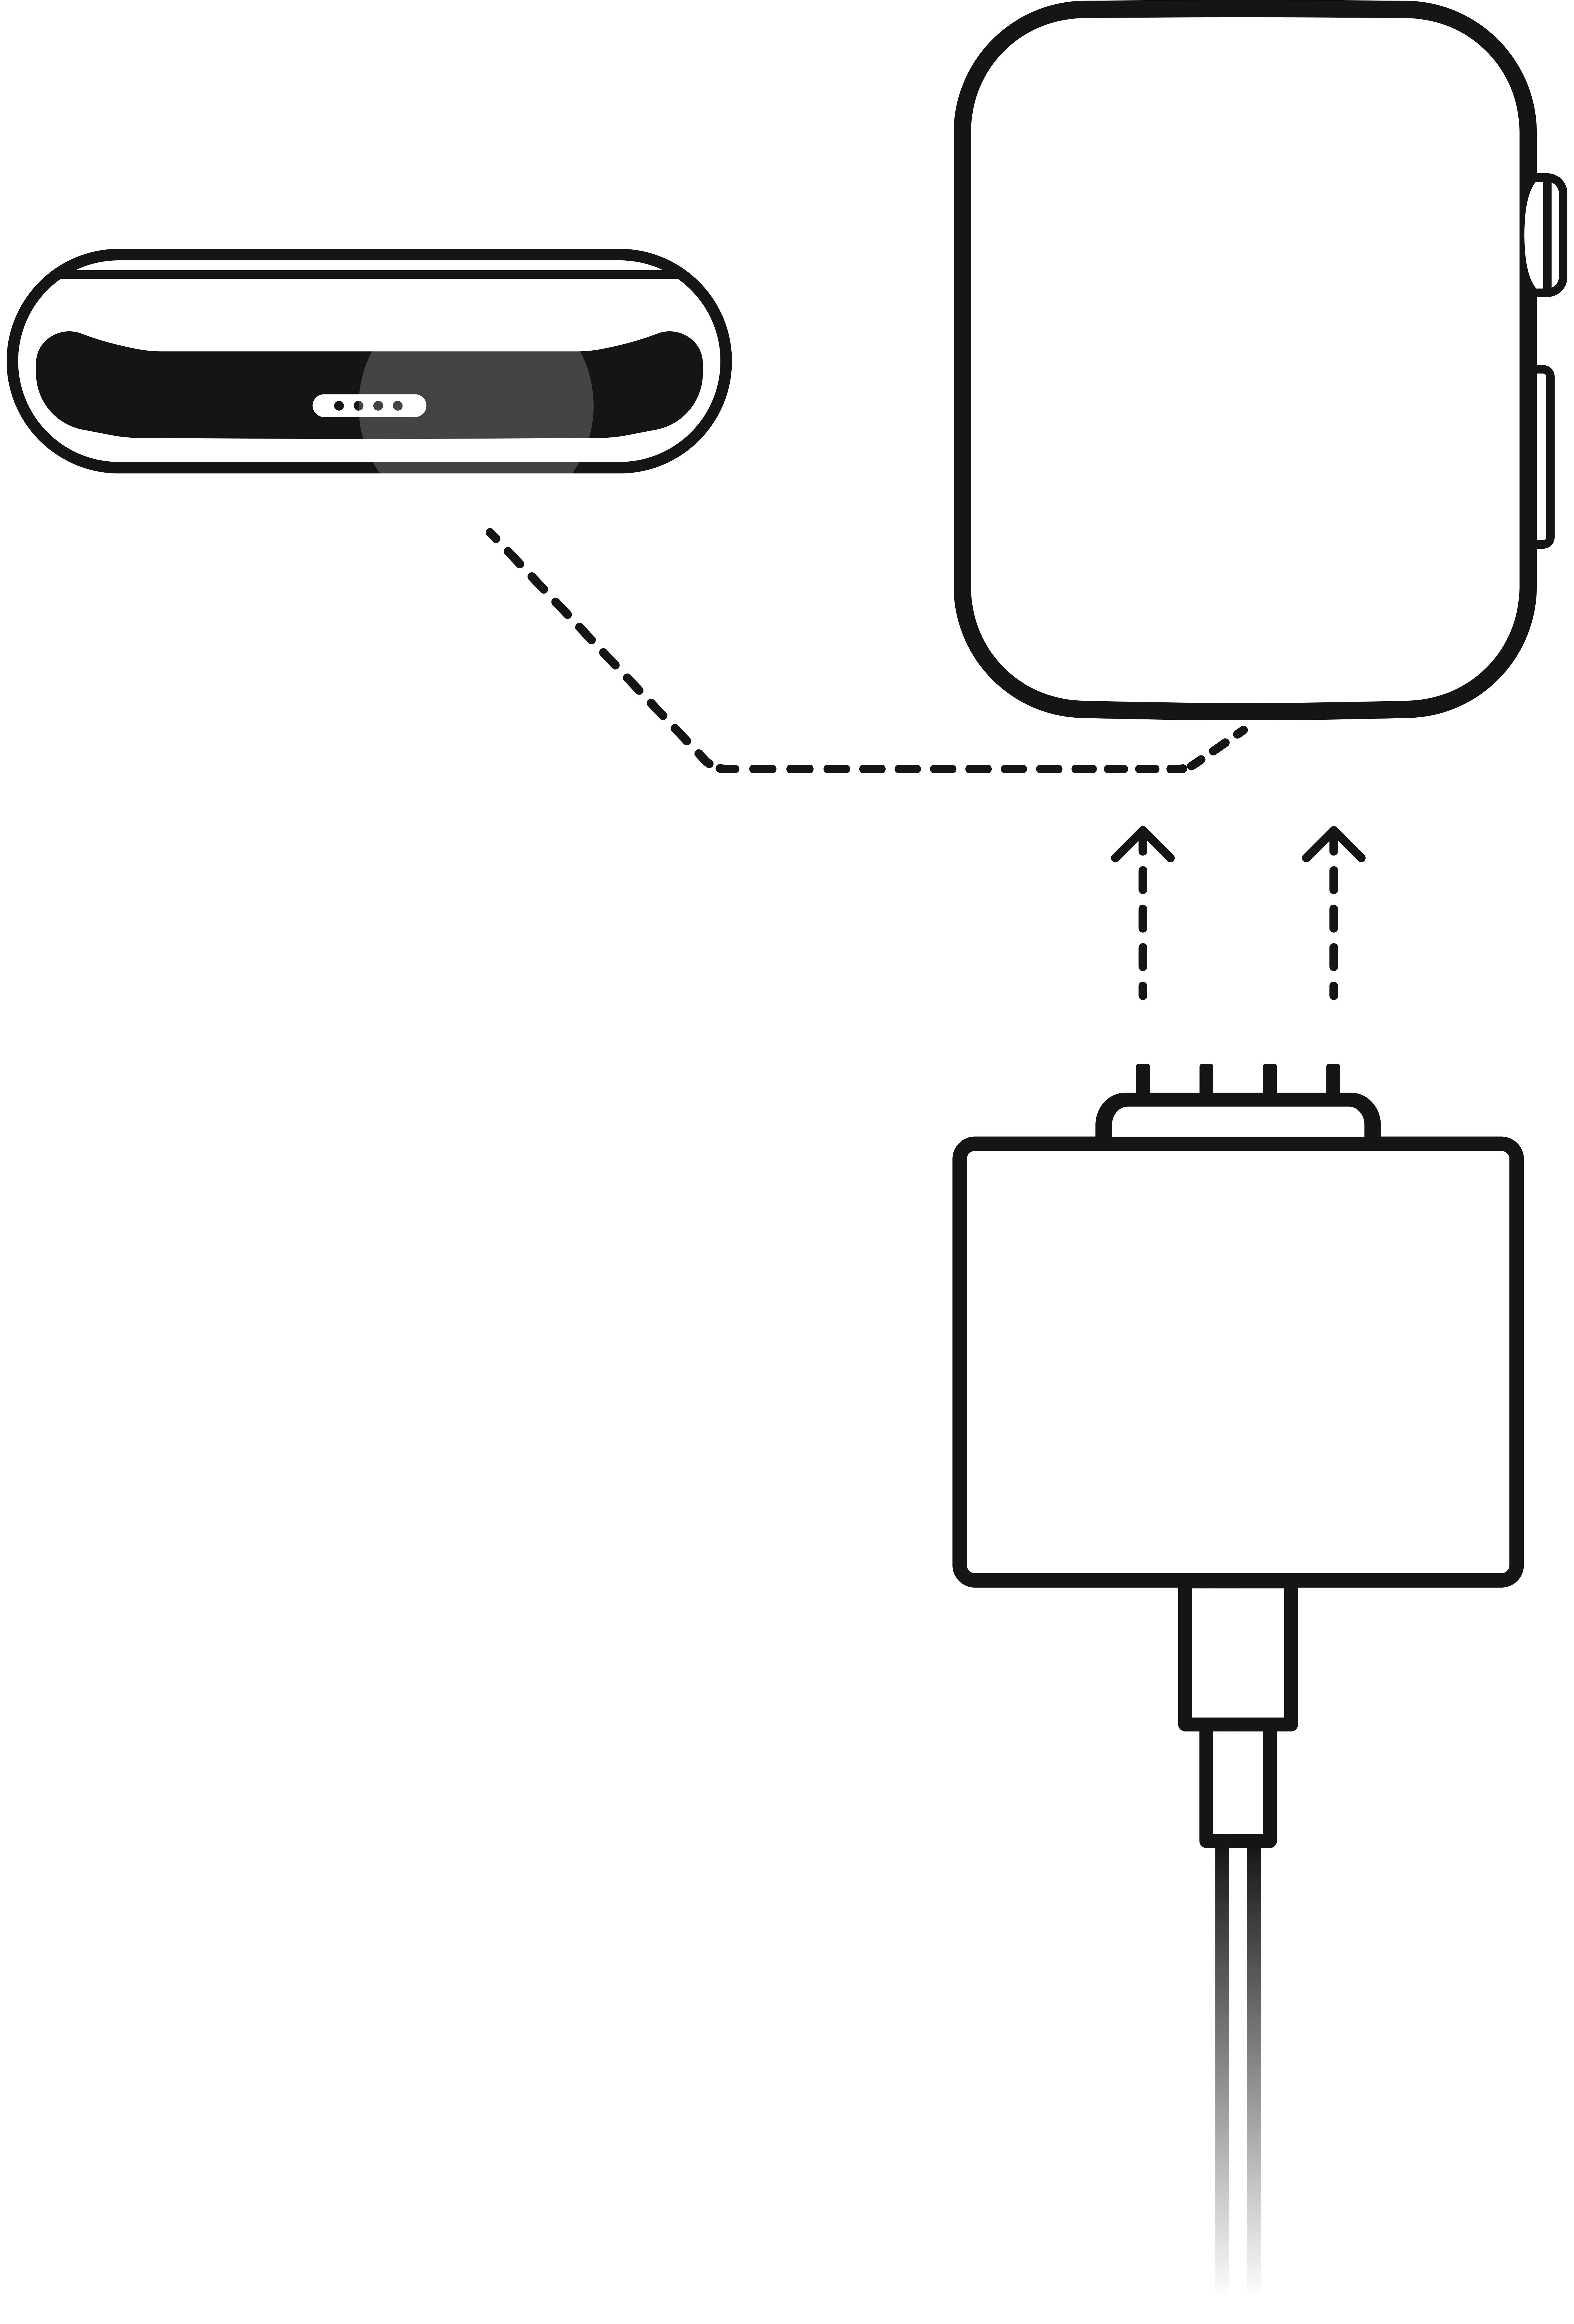 Режим DFU Шаг 1. Подключите Apple Watch через адаптер кабеля для передачи данных.